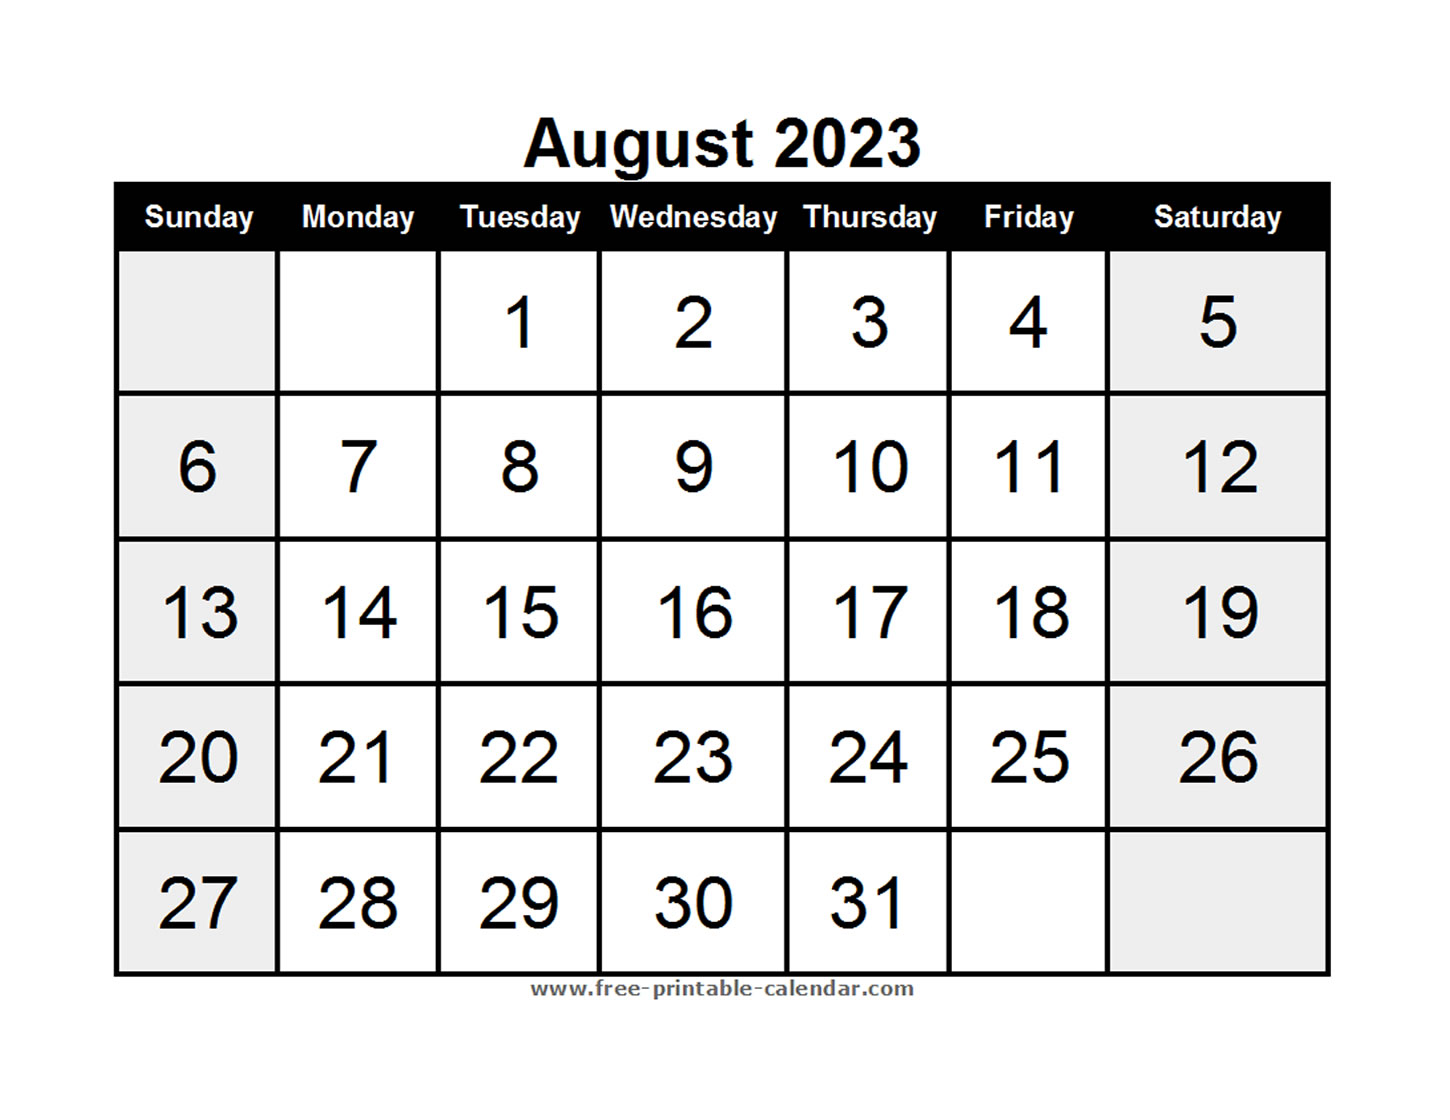 Blank Calendar August 2023 - Free-printable-calendar.com